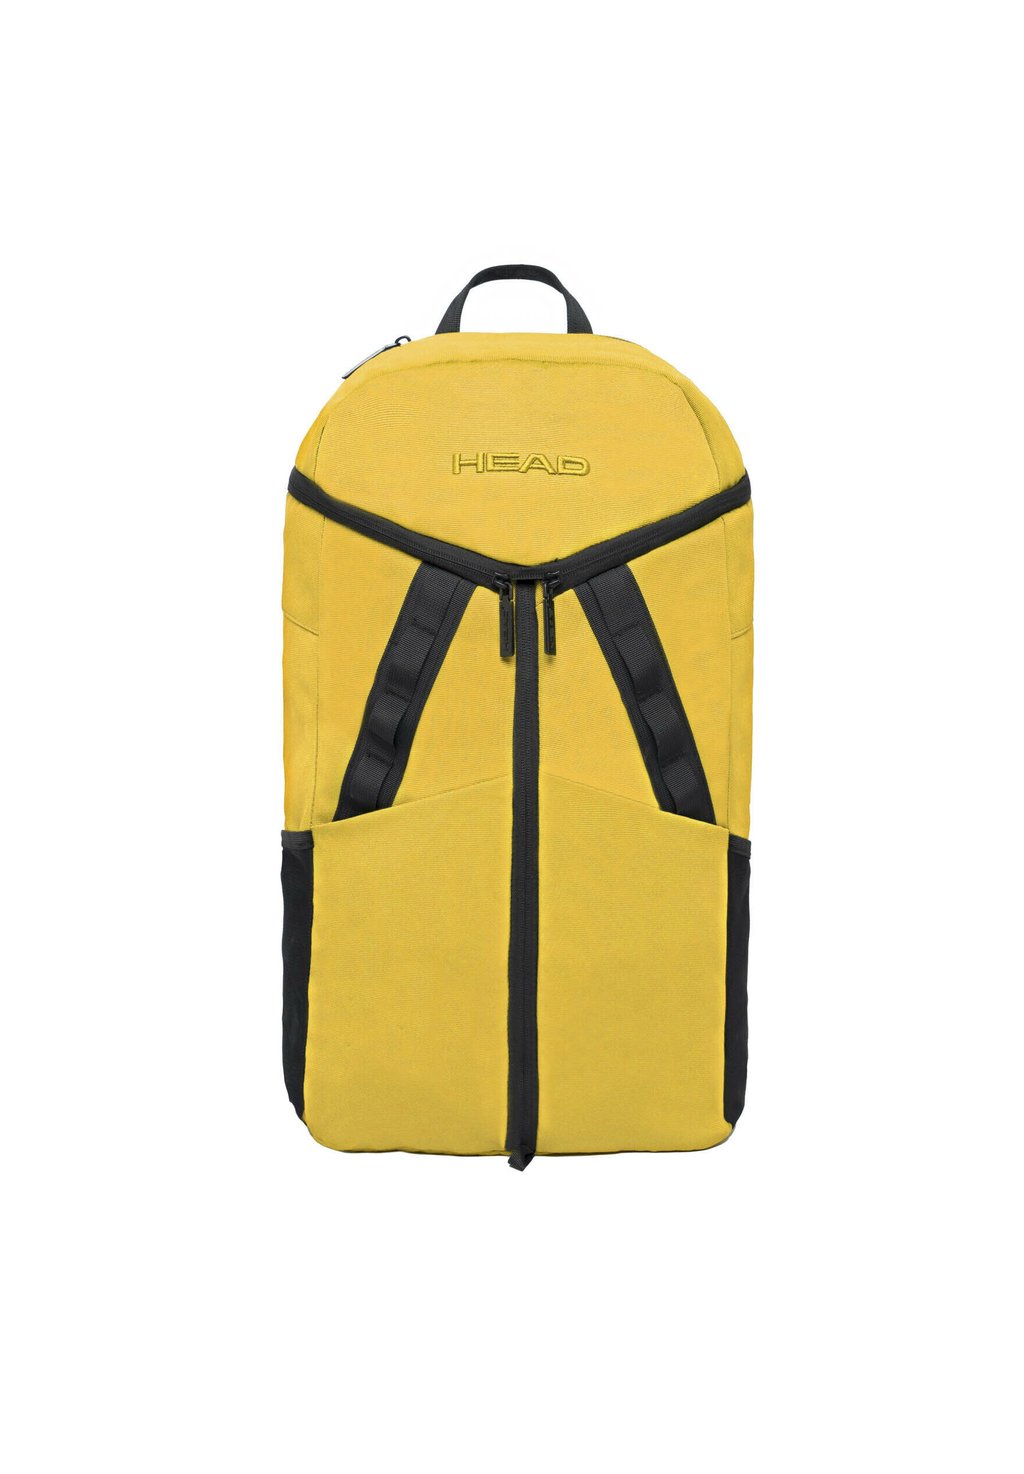 Рюкзак для путешествий Head Point Y, желтый рюкзак head core черный белый 283421 bkwh